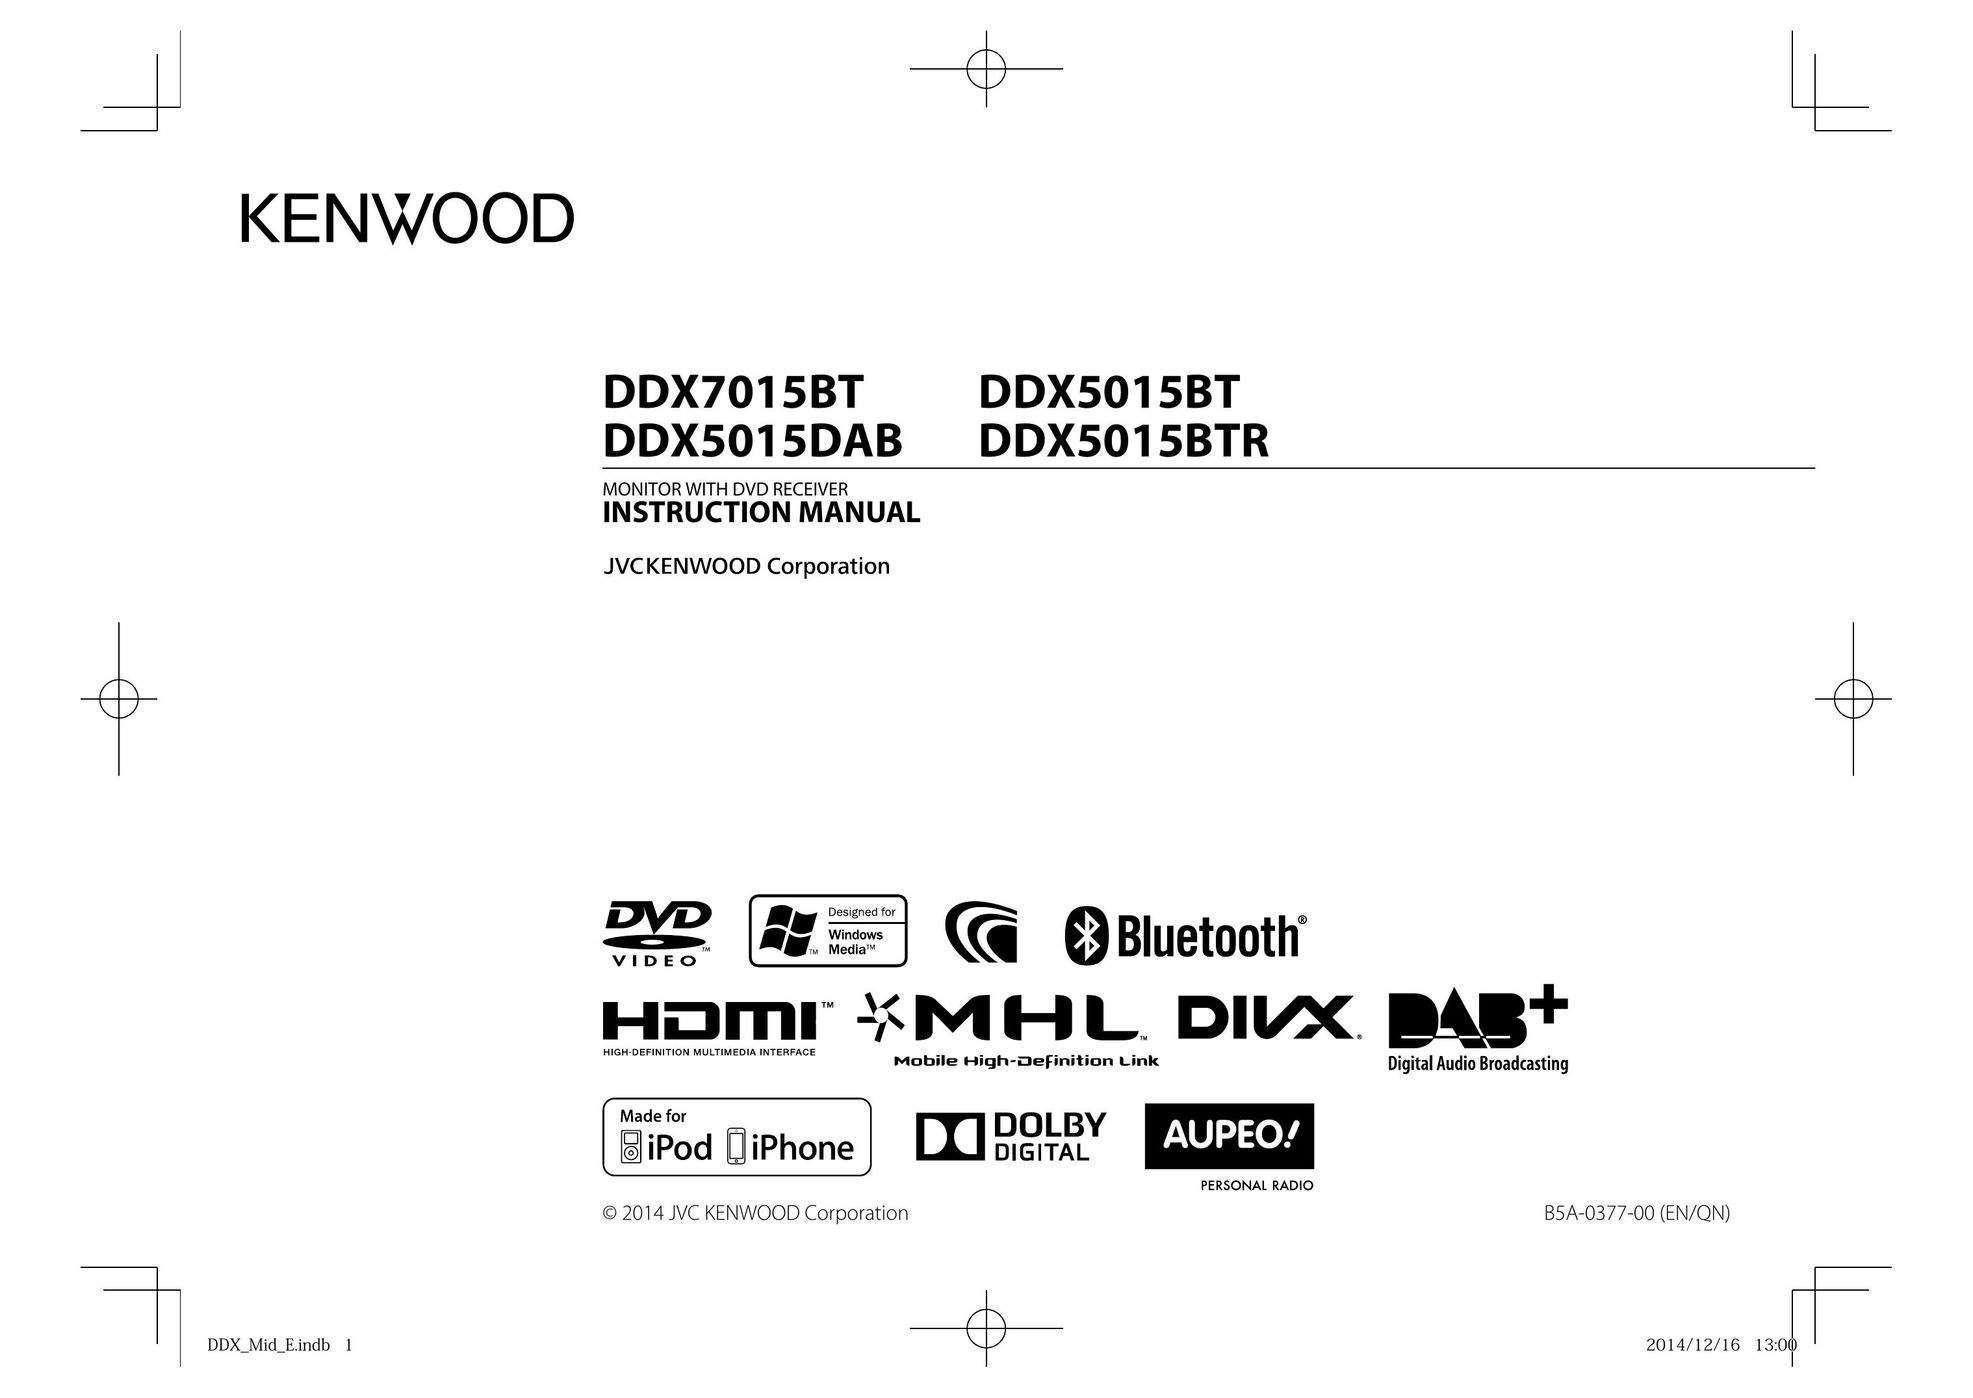 Kenwood DDX5015BTR Car Video System User Manual